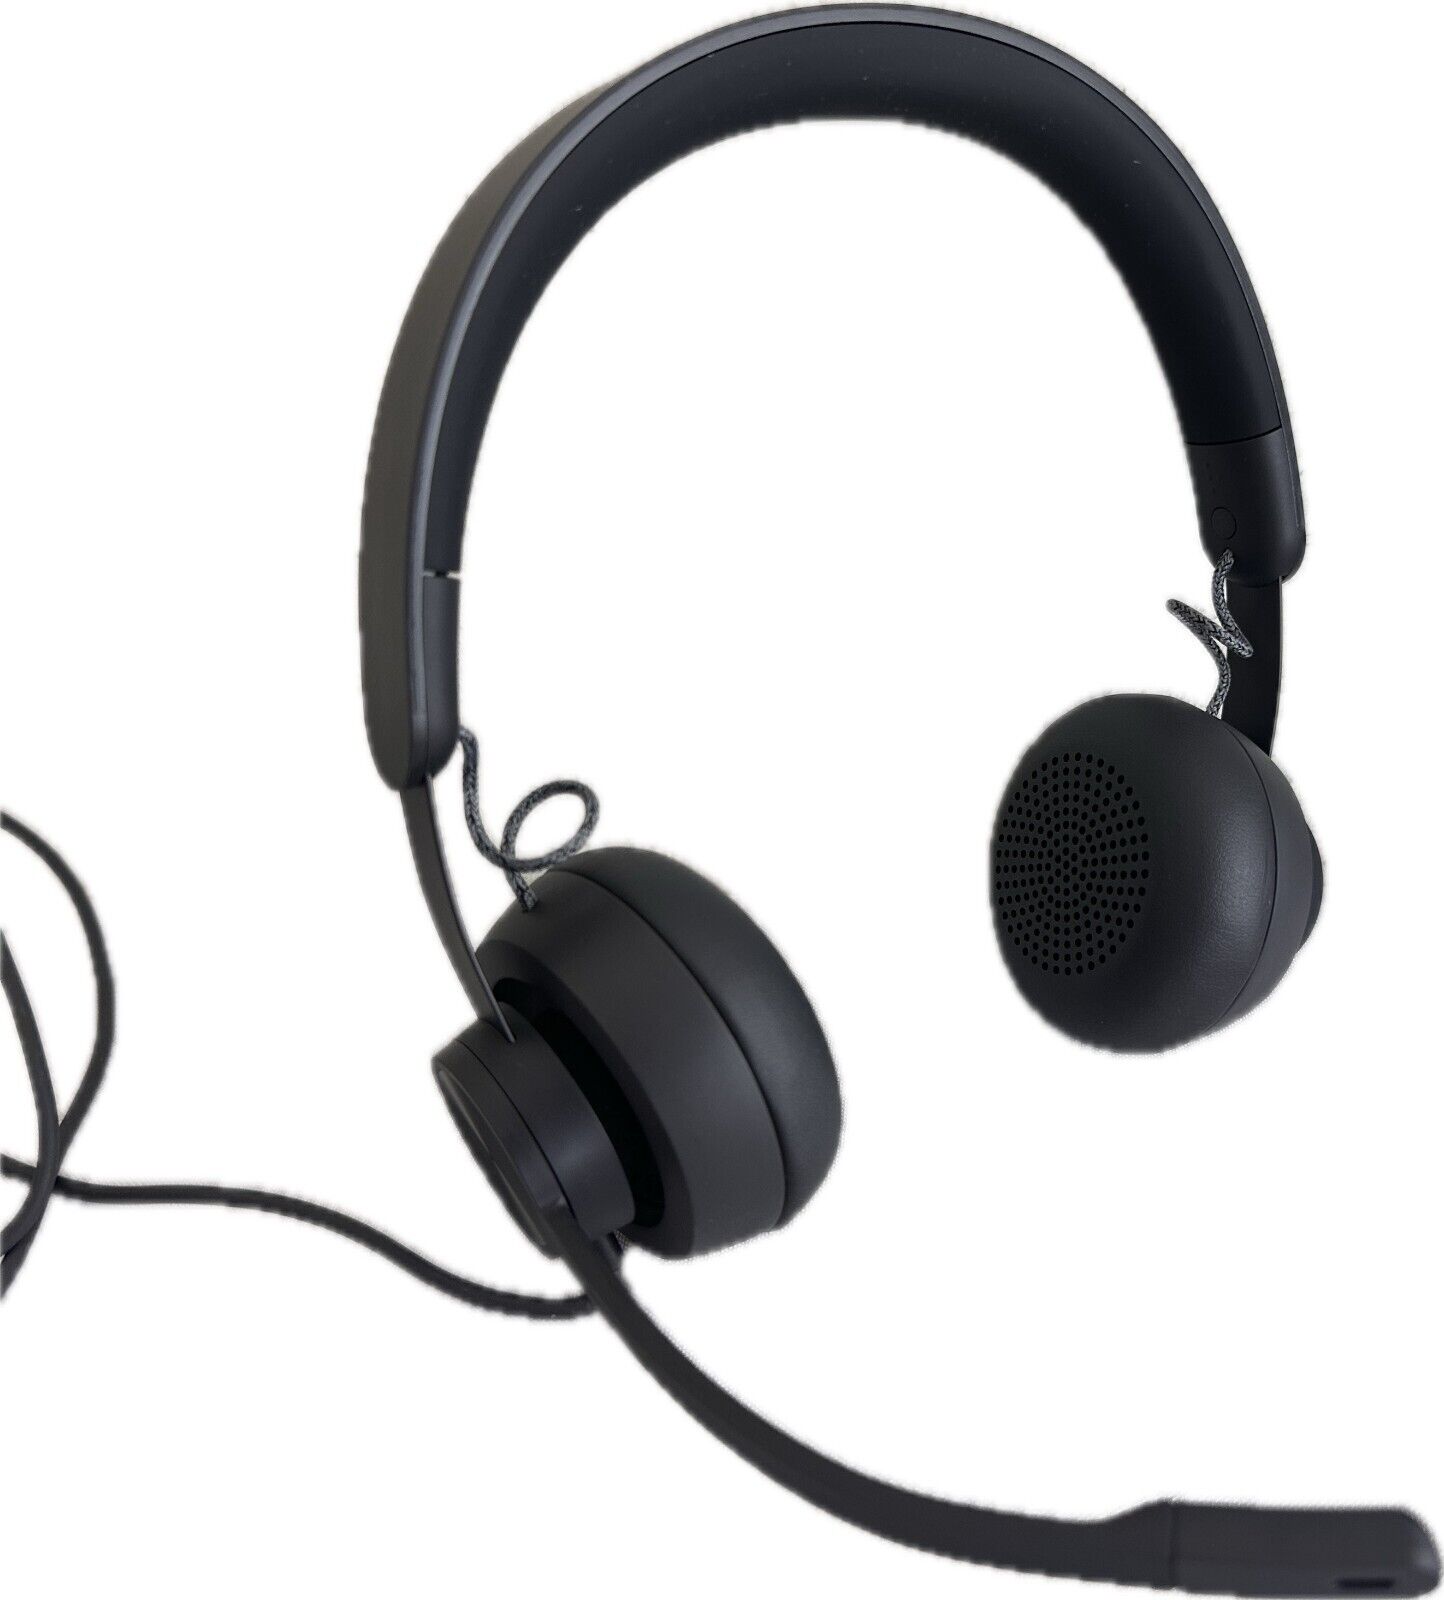 Logitech 981-000876 Zone Wired Headset Black (New in Box/ Unused)